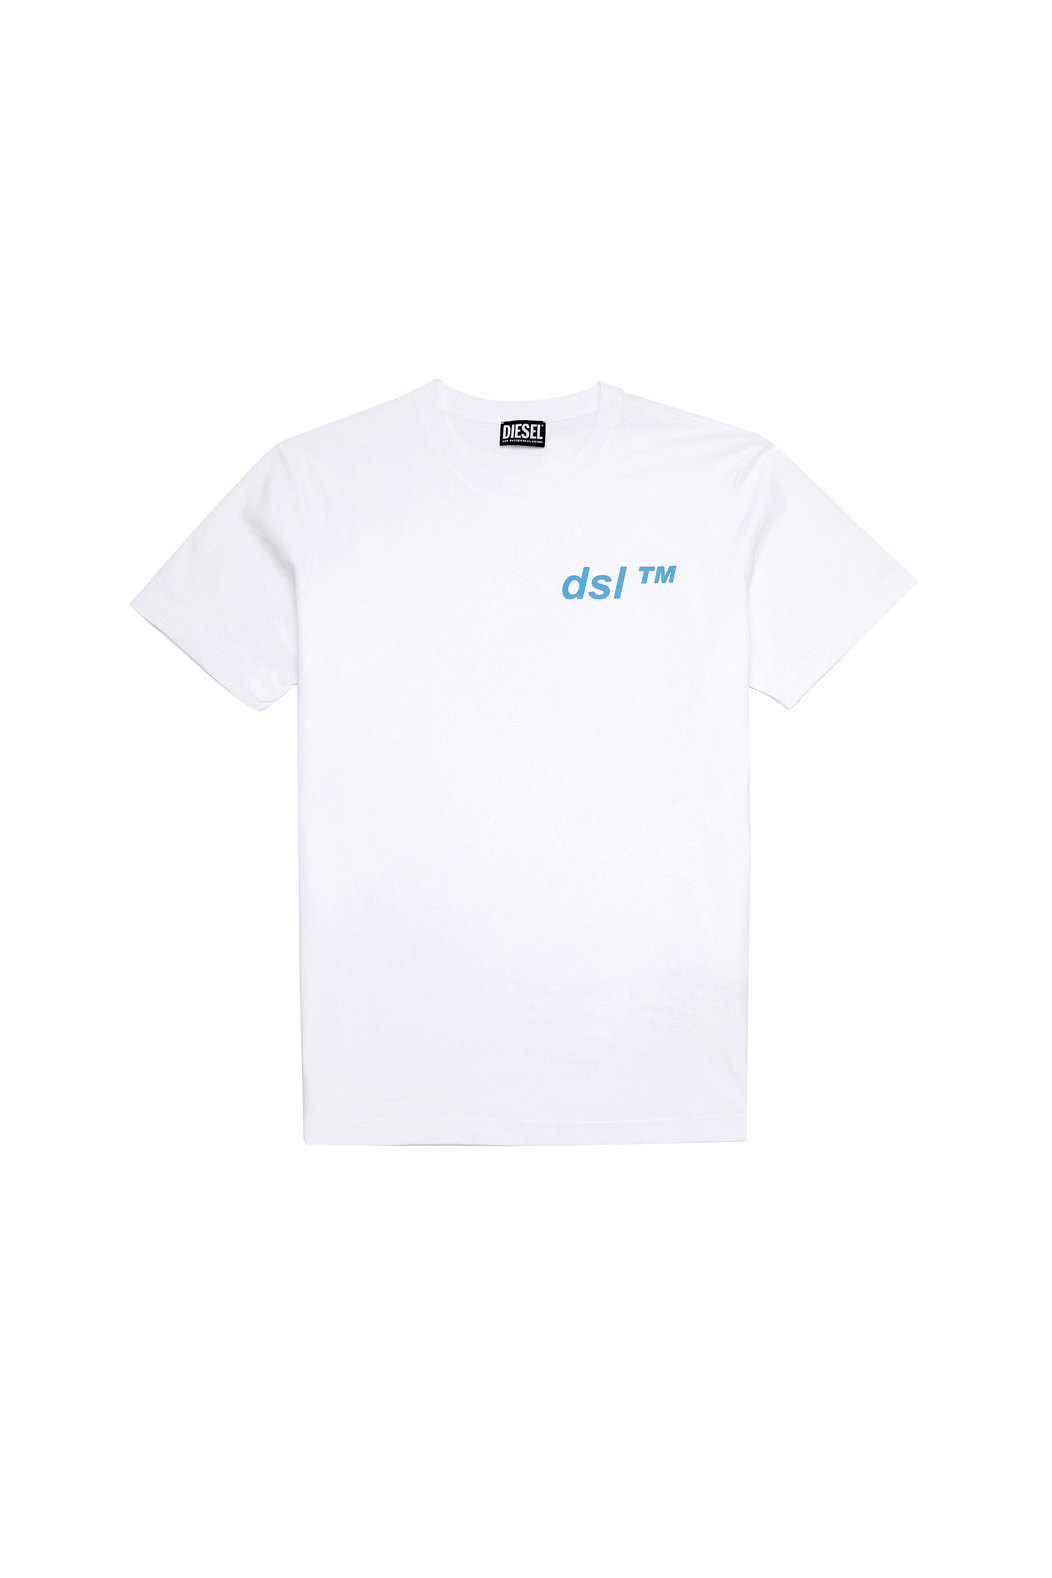 Cotton T-Shirt With Dsl™ Print